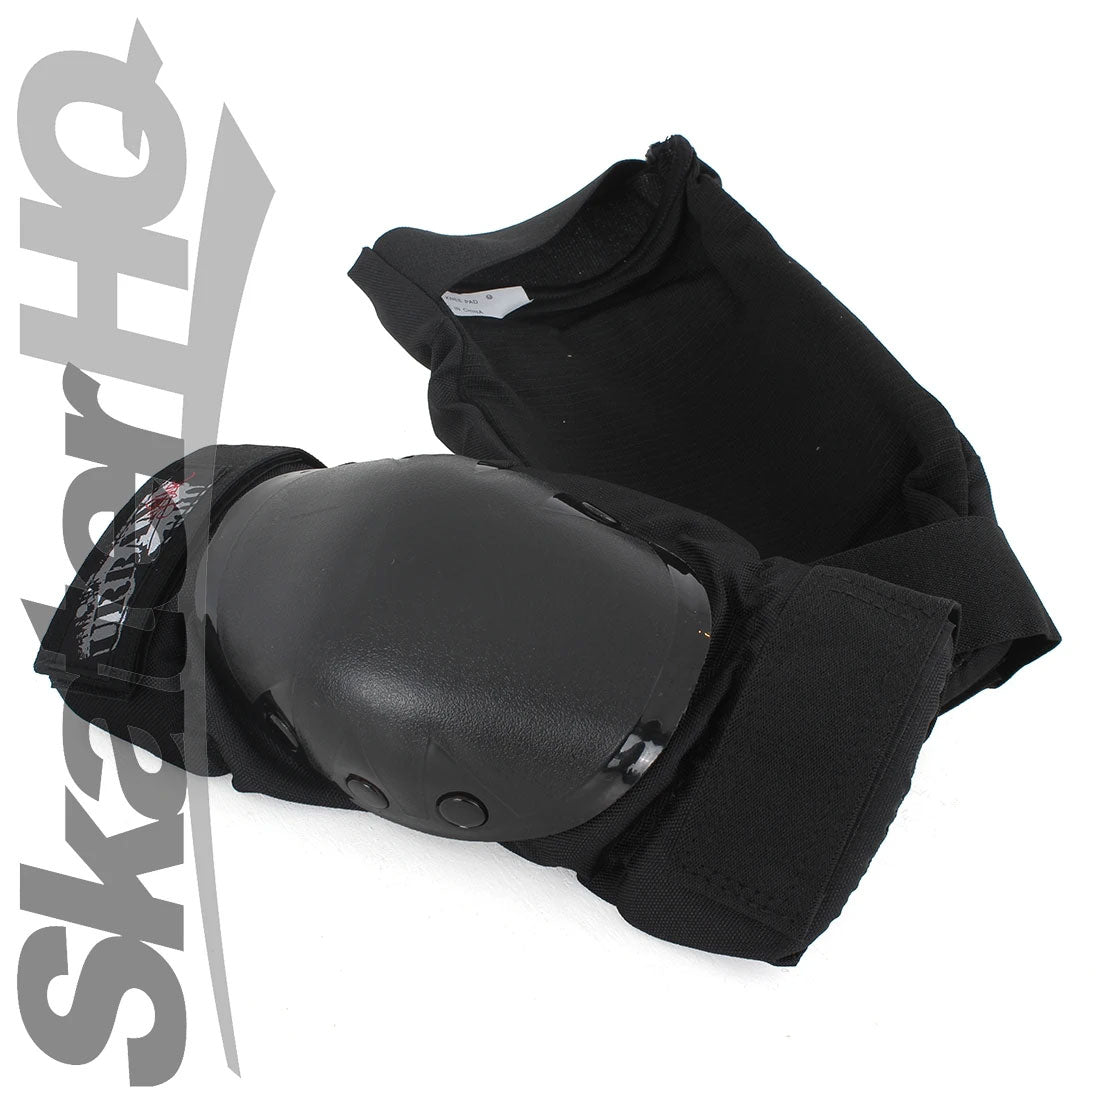 Urban Skater Knee/Elbow Black - XLarge Protective Gear